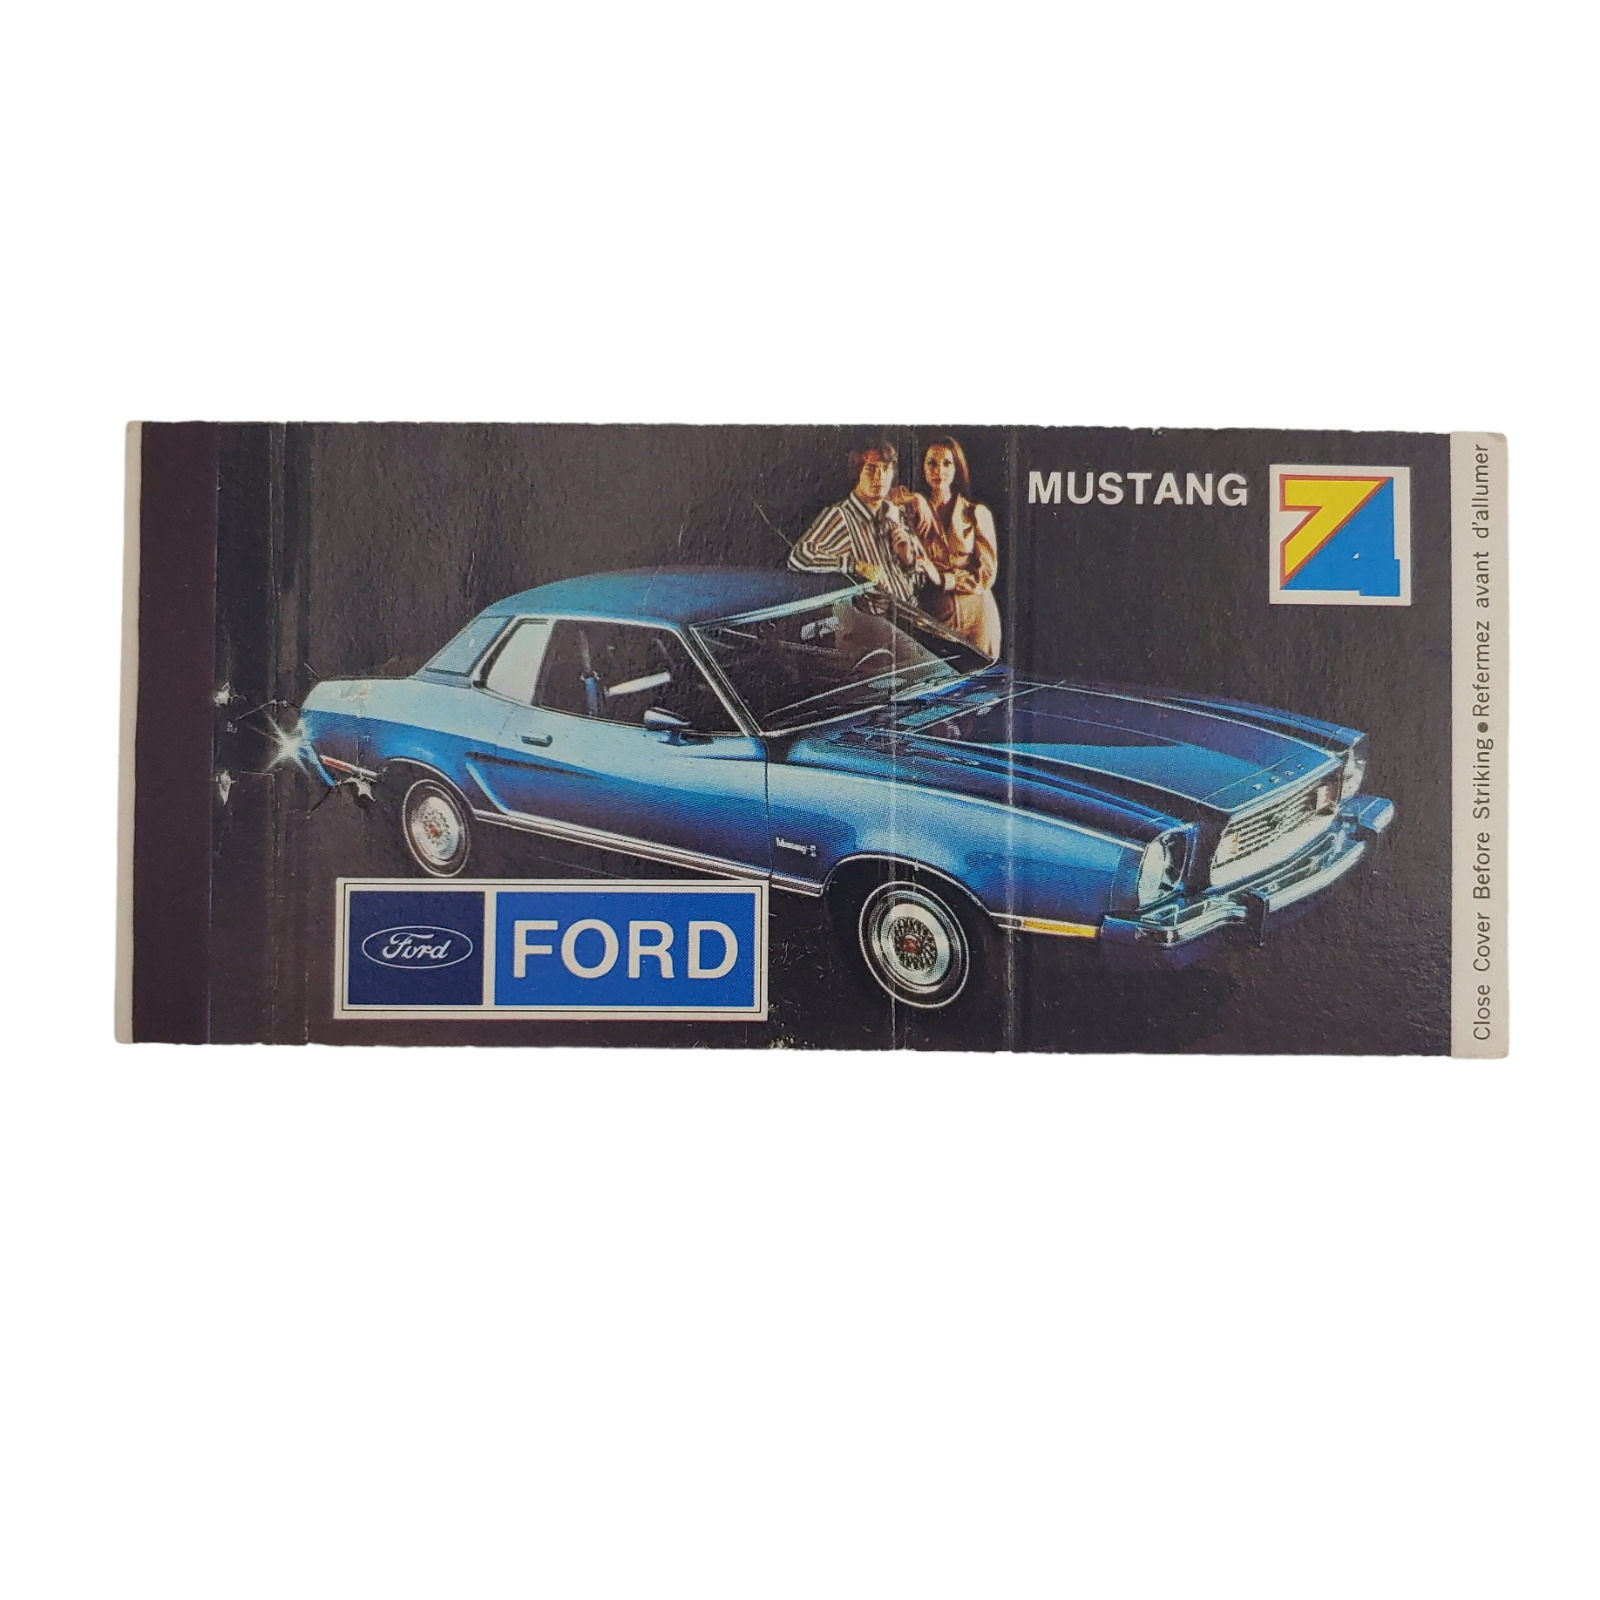 Vintage Matchbook Cover 1974 Ford Mustang - Jack Hay Motors Limited